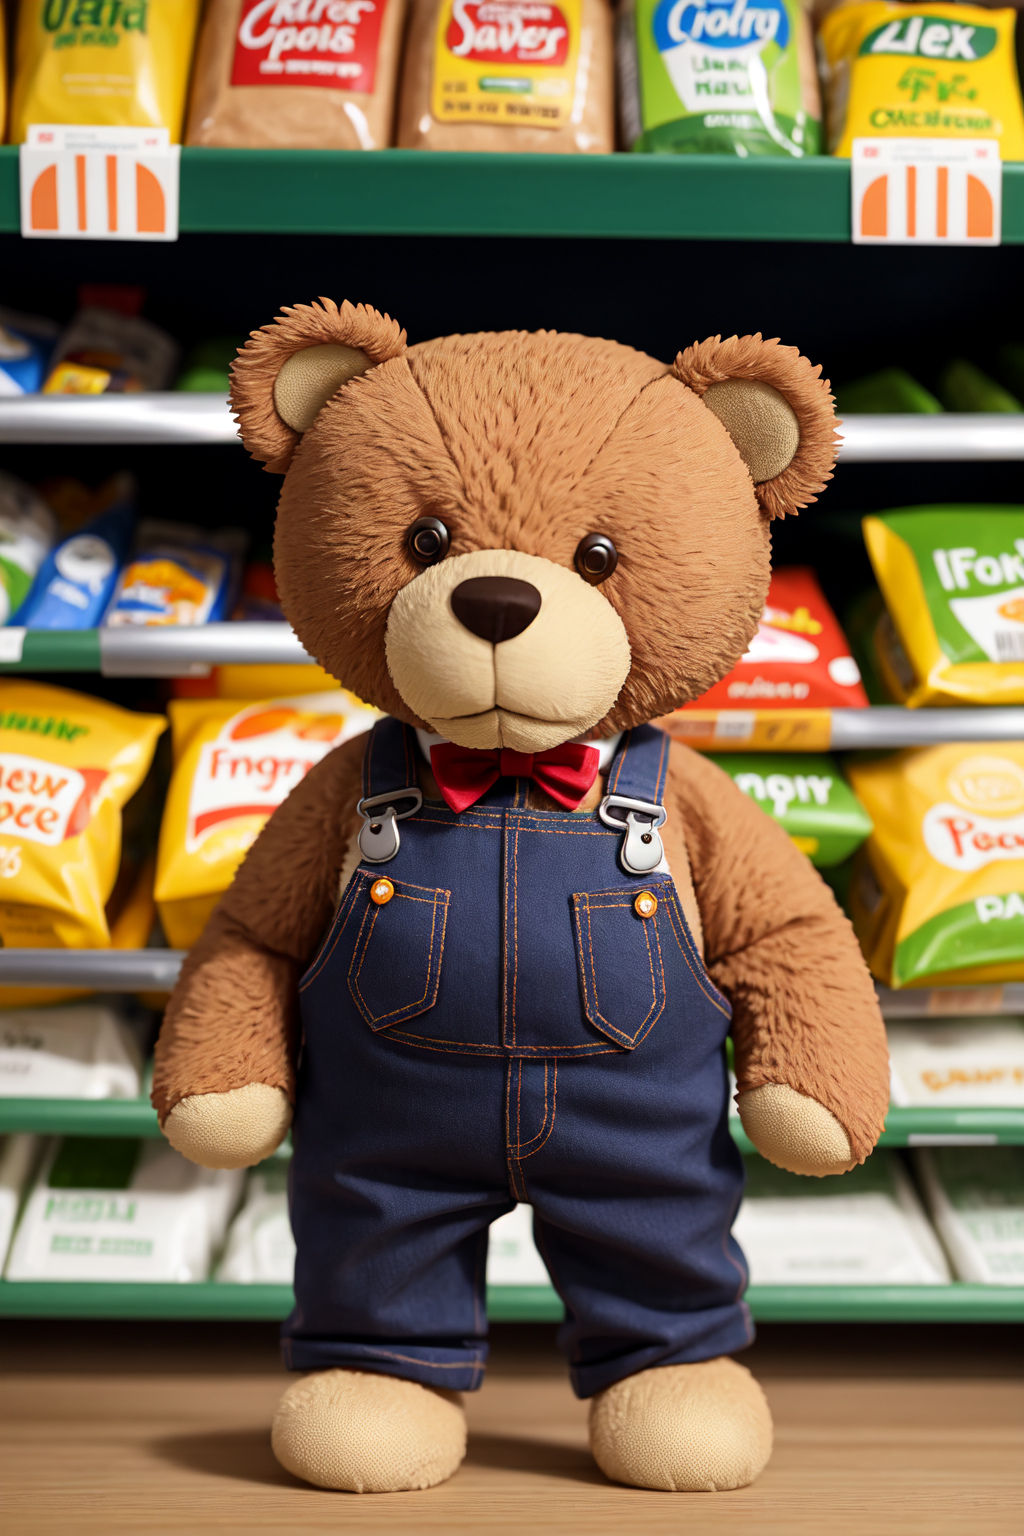 A teddy bear wearing dungarees at the supermarket, dslr, ultra quality, sharp focus, tack sharp, dof, film grain